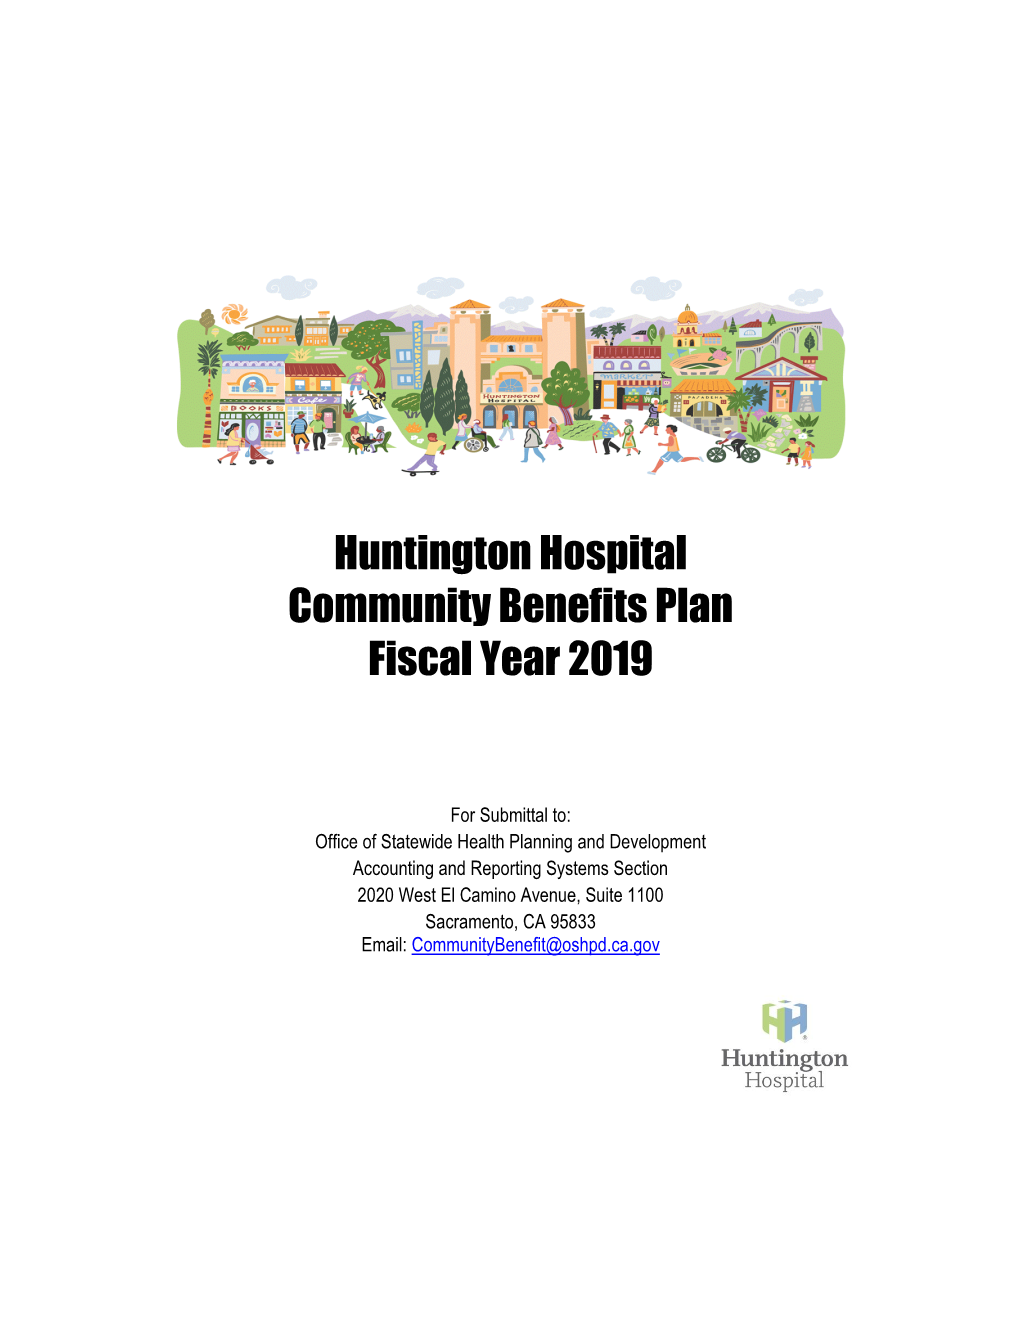 Huntington Hospital Community Benefits Plan Fiscal Year 2019